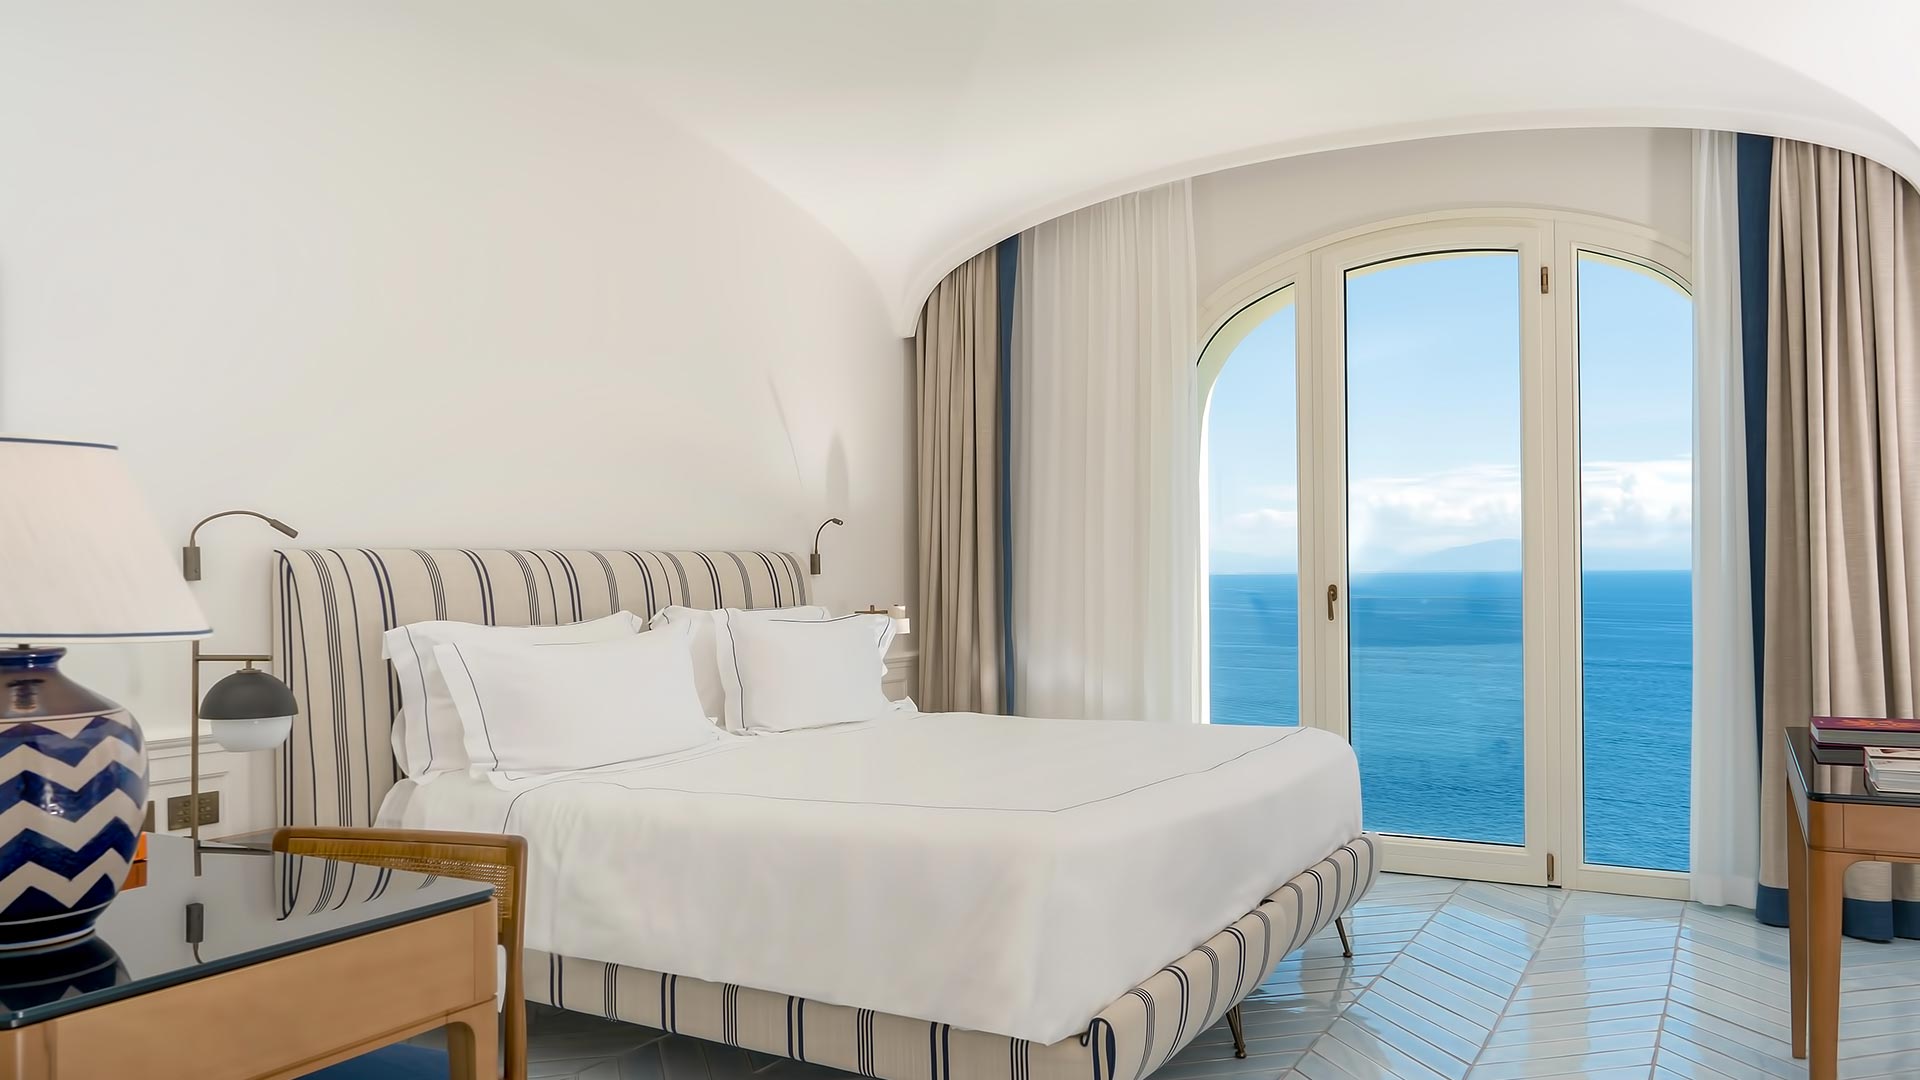 Best hotels in amalfi coast Borgo 